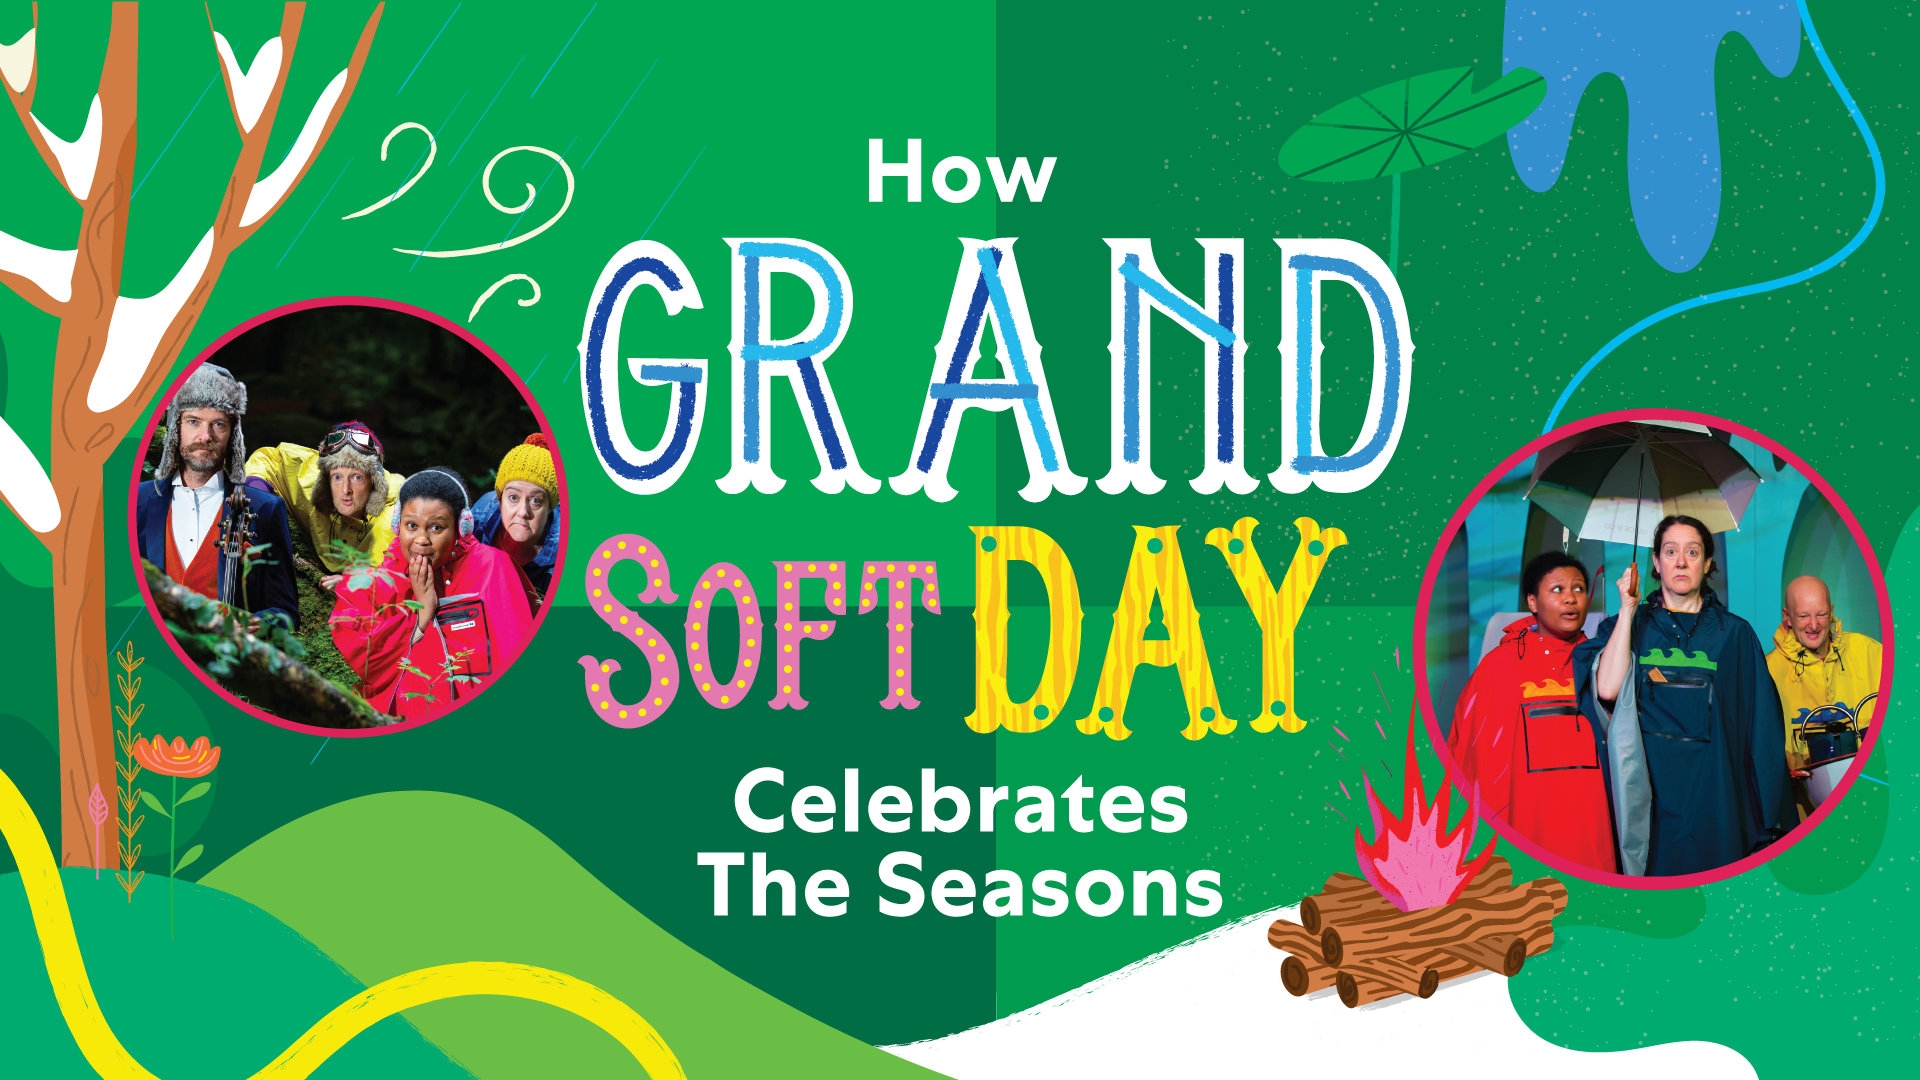 "How Grand Soft Day Celebrates The Seasons" blog header